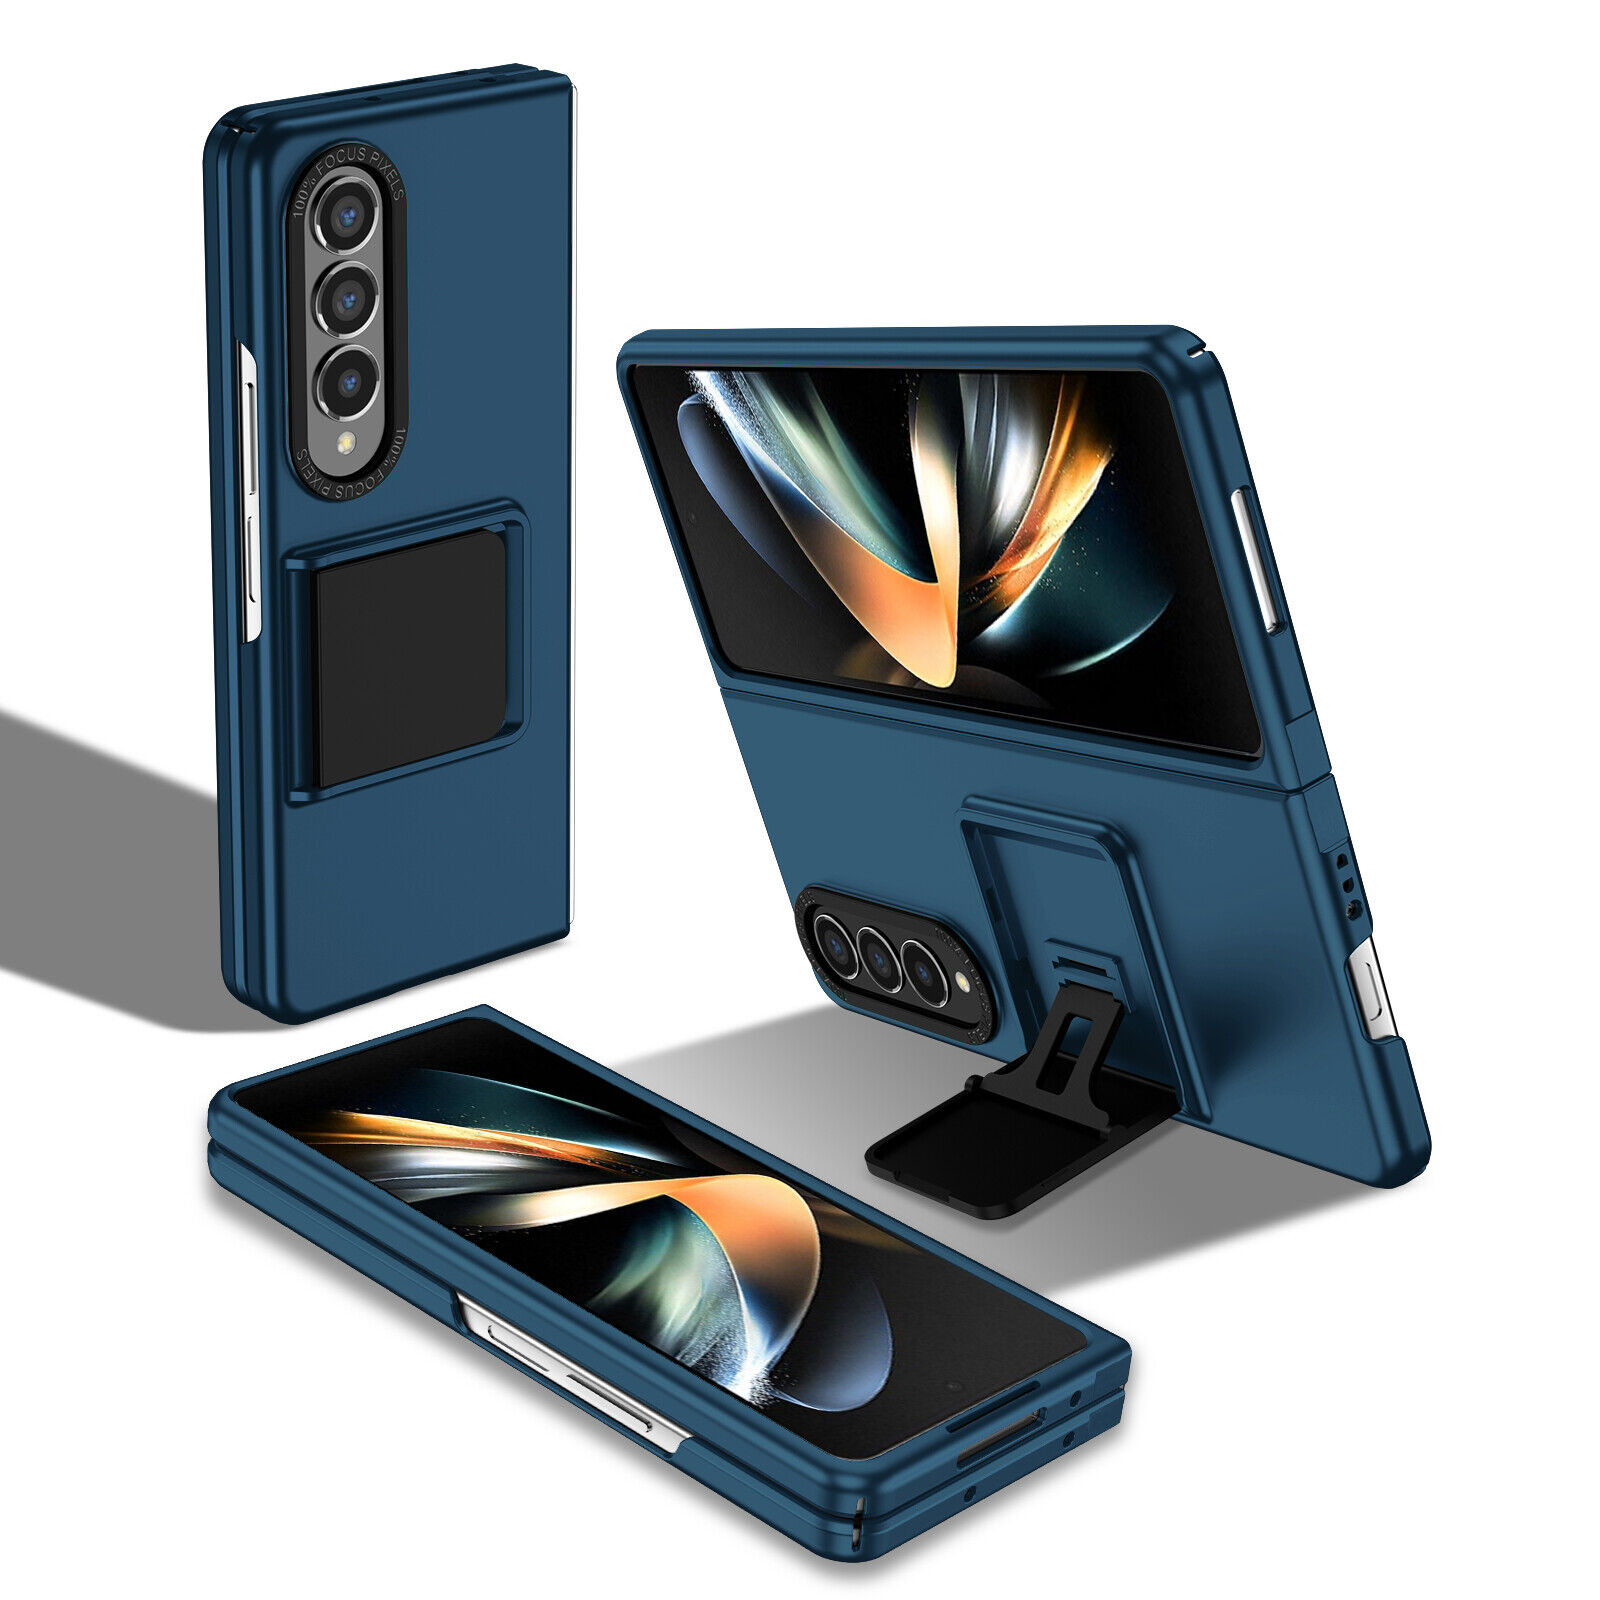 Samsung Galaxy Z Fold 4 Fold 3 5G Shockproof Case Slim Fold Stand Hard Cover Blue